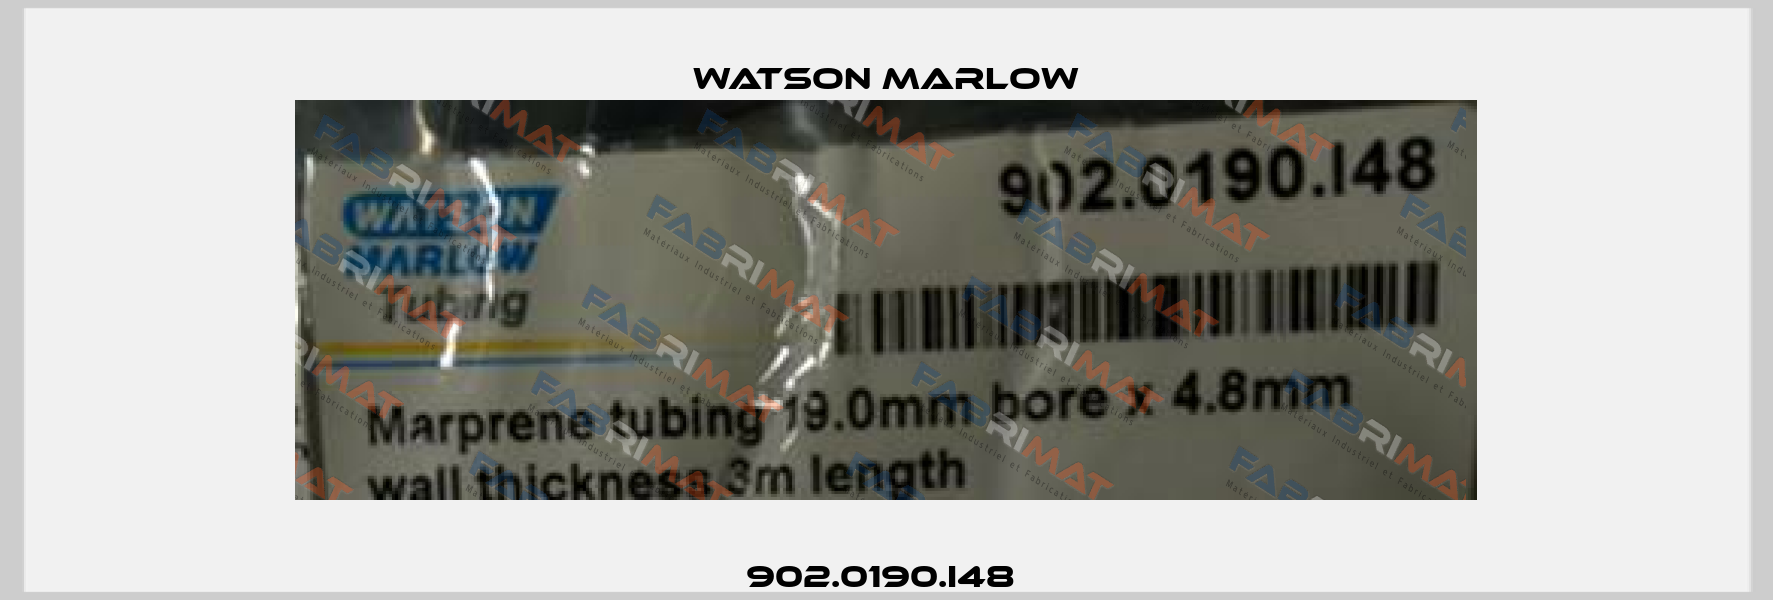 902.0190.I48  Watson Marlow